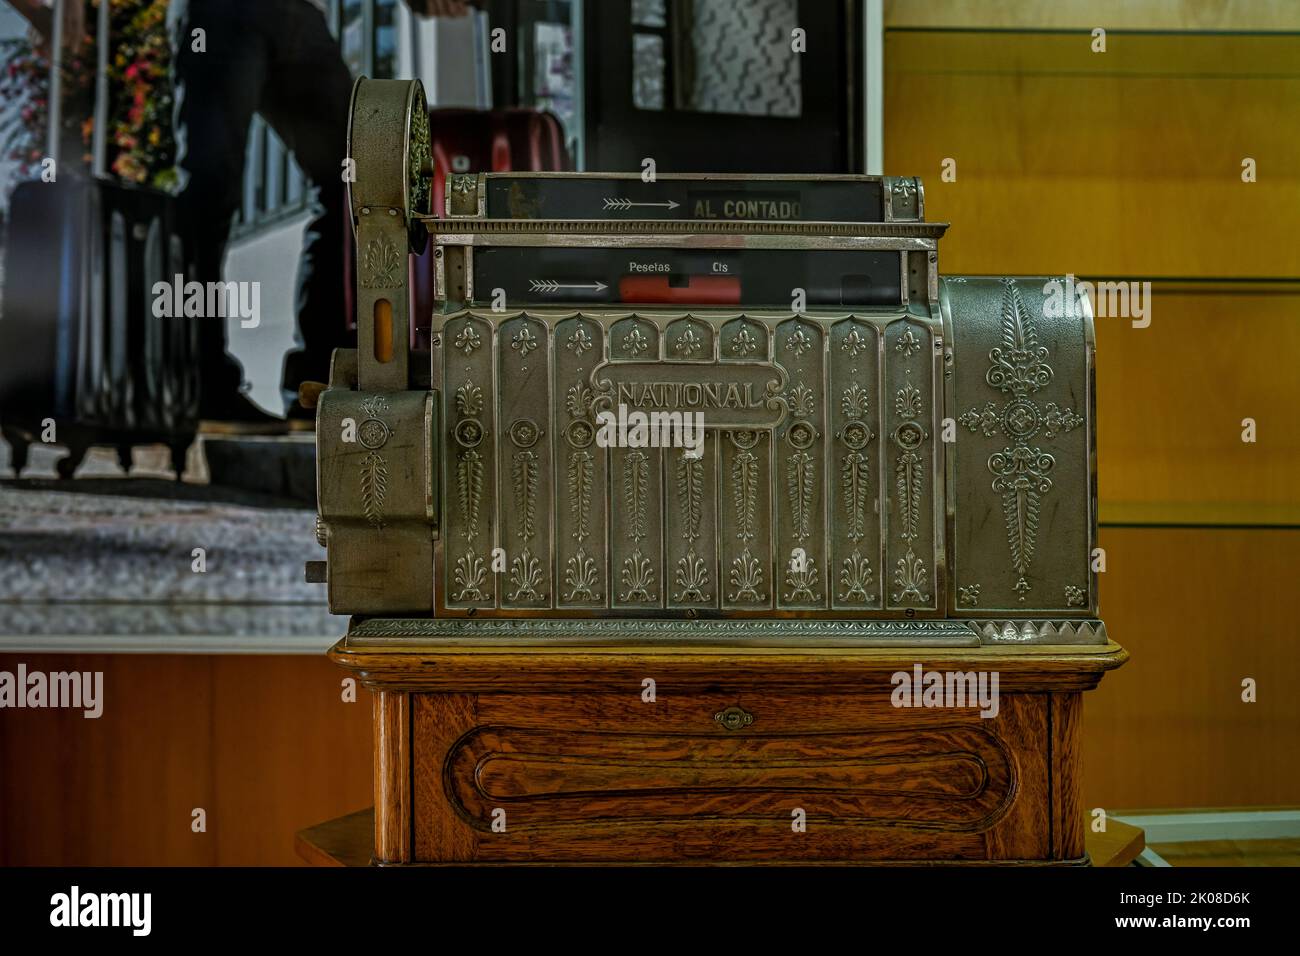 Antique crank-operated cash register, old metal. Stock Photo